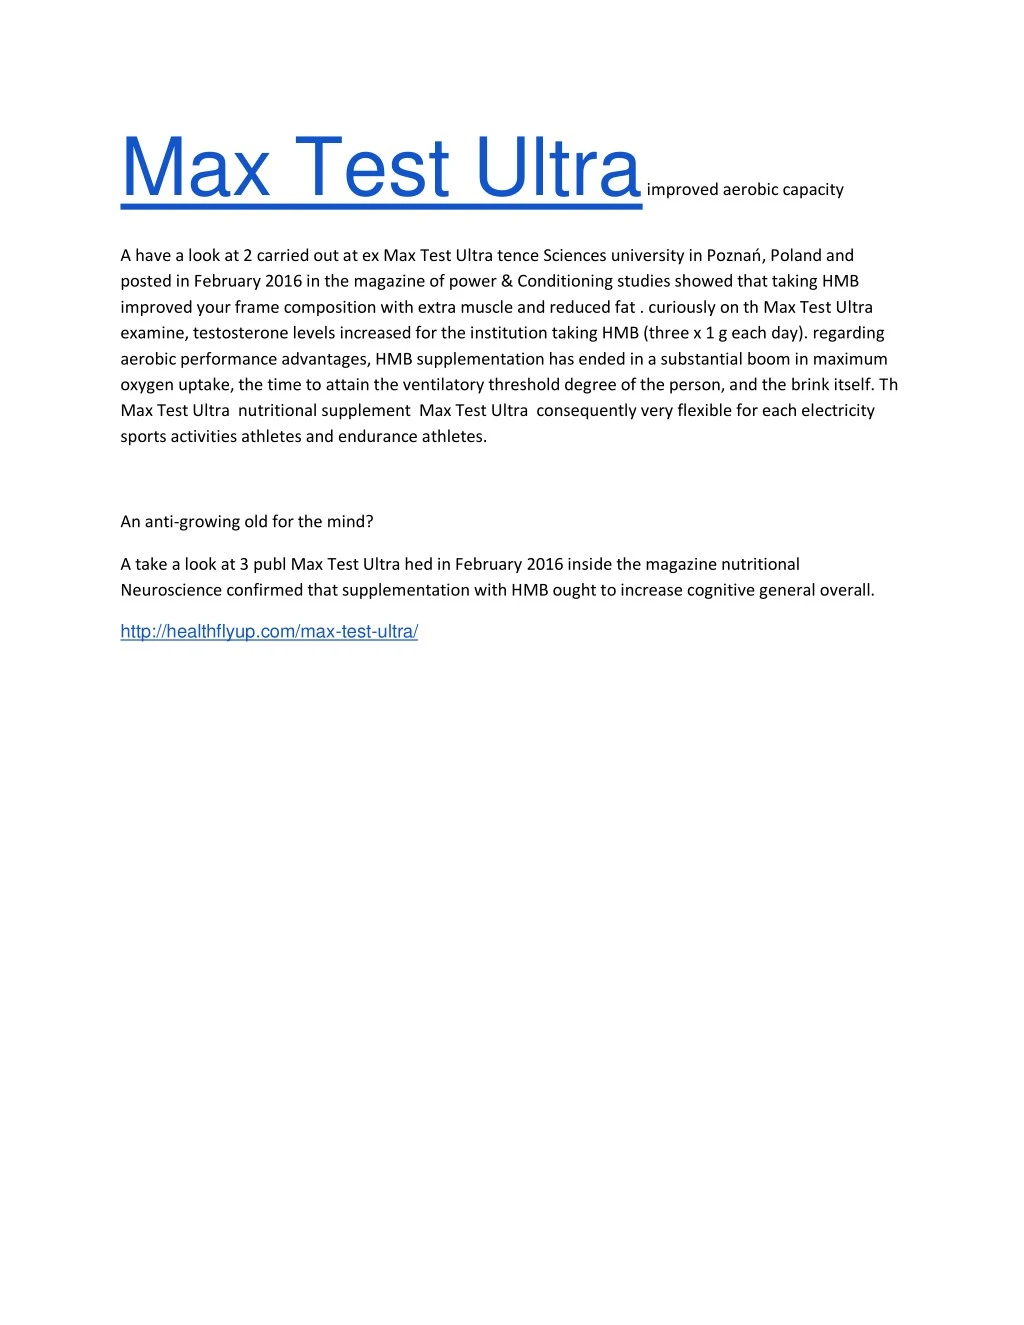 max test ultra improved aerobic capacity